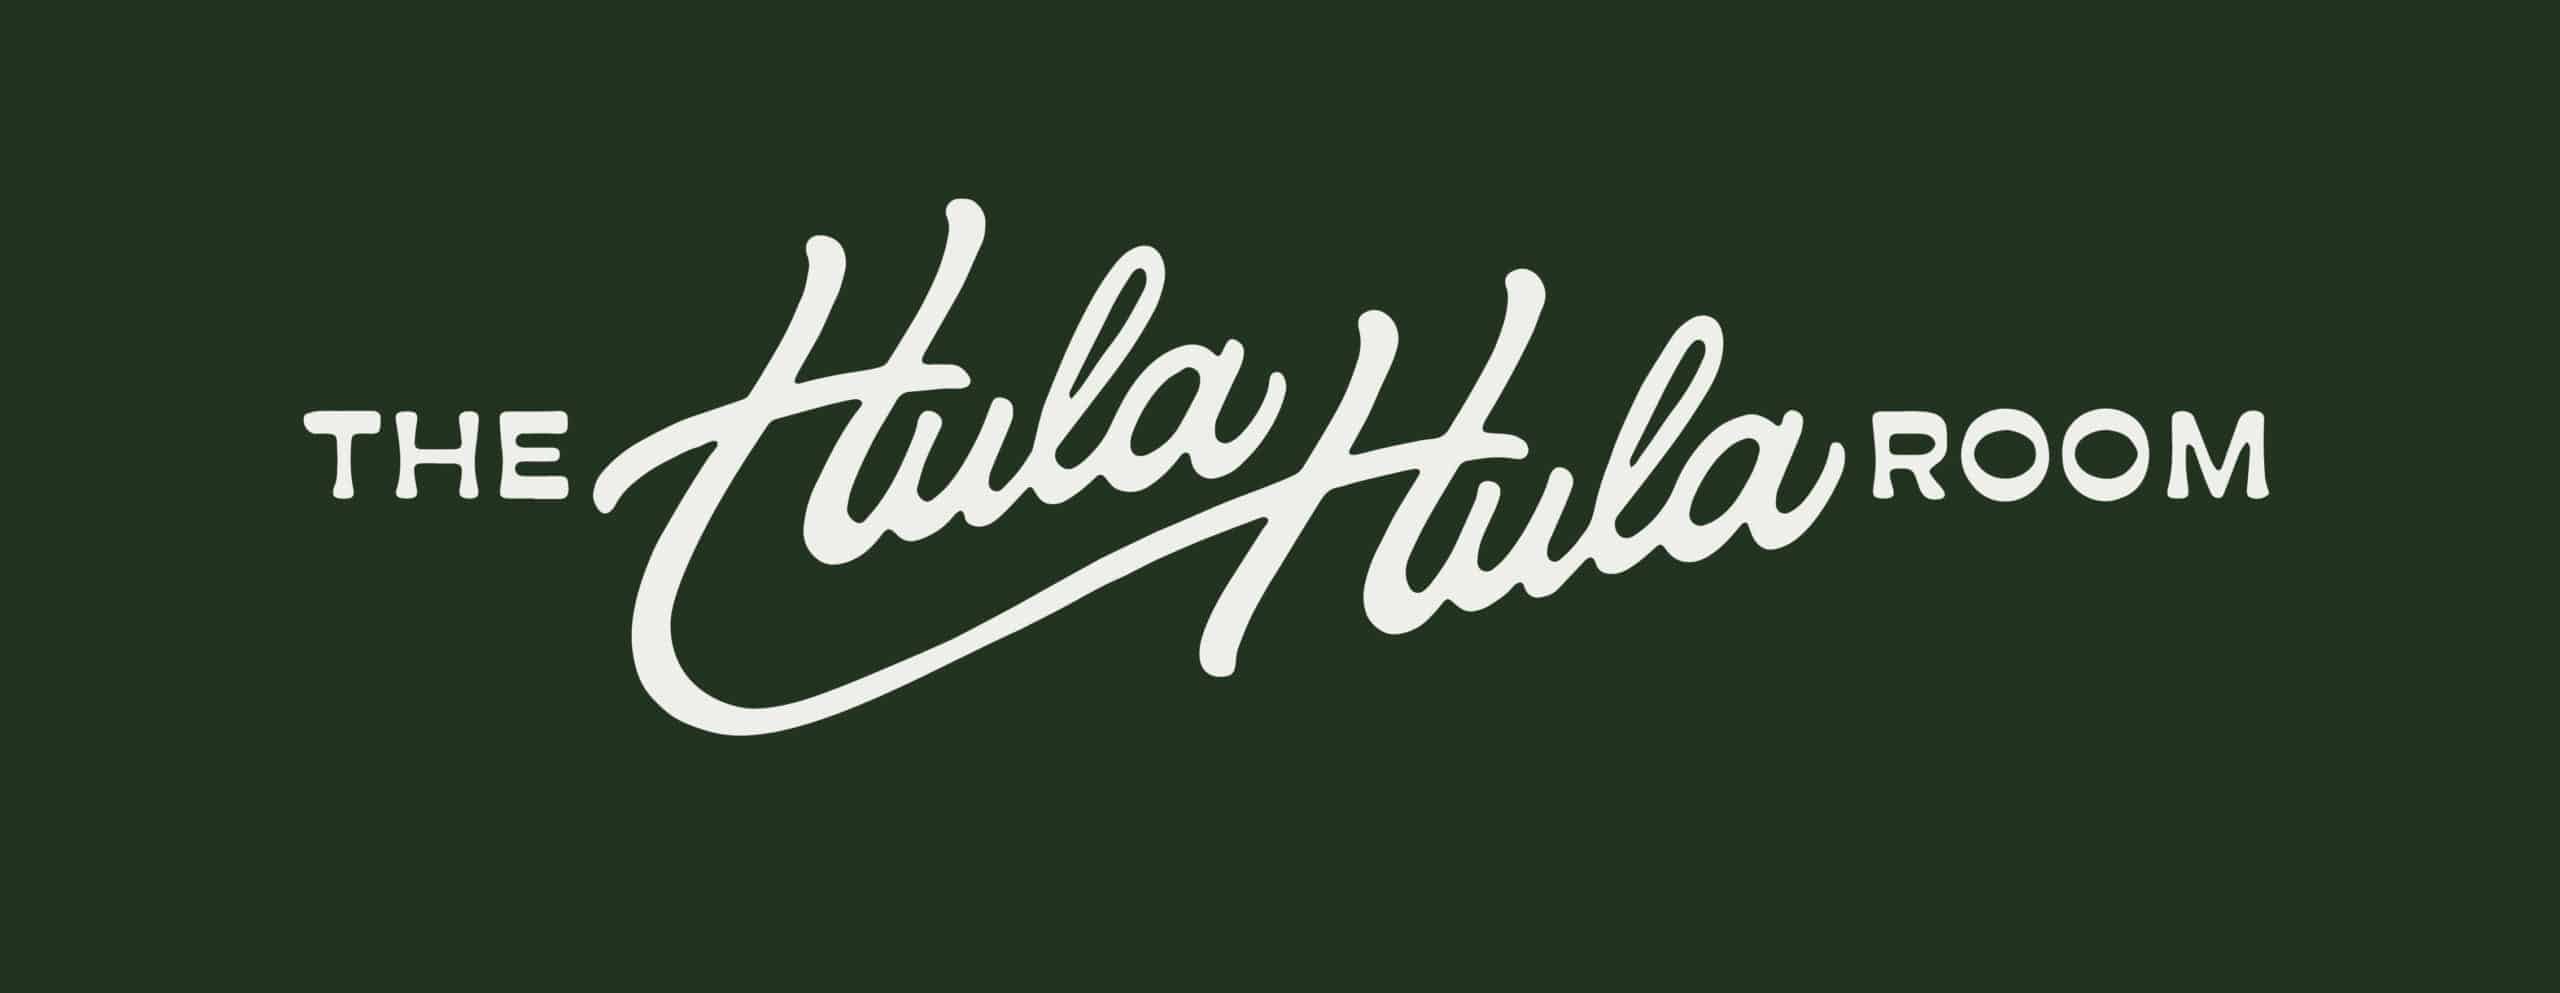 The Hula Hula Room in Torrance California Tiki Bar Branding by Stellen Design branding and logo design agency in Los Angeles specializing in hospitality branding custom script logo design